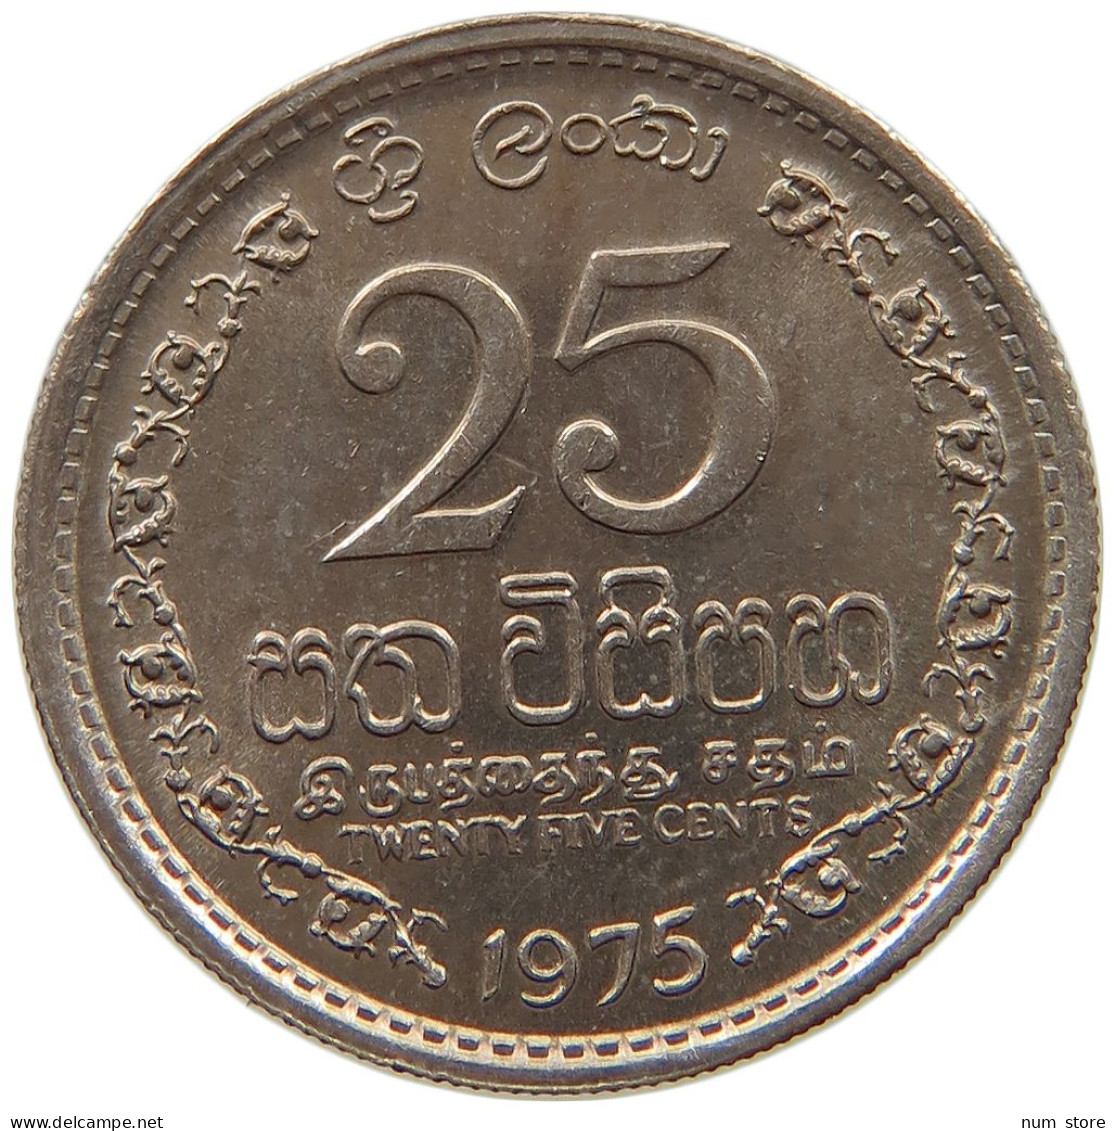 SRI LANKA 25 CENTS 1975  #c053 0295 - Sri Lanka